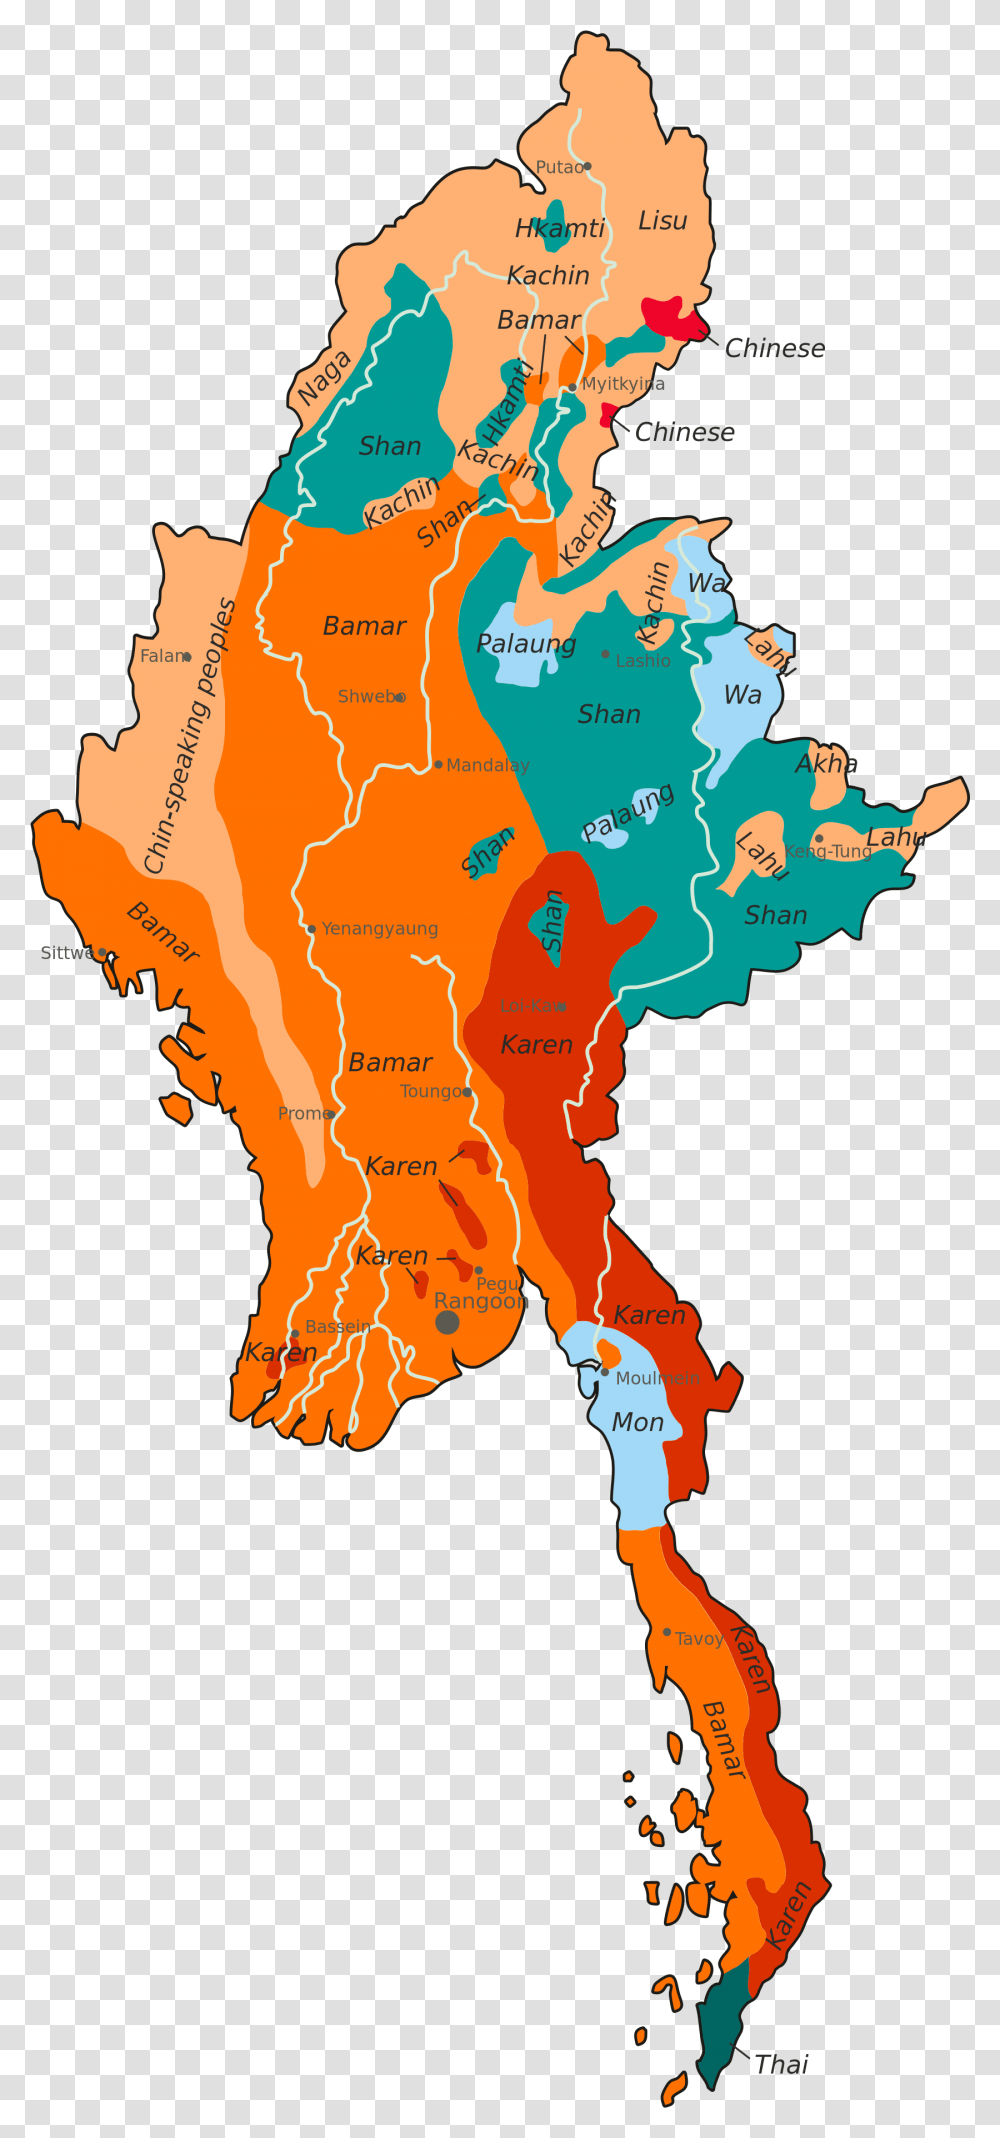 Clip Art File Ethnolinguistic Of En Burma Ethnic Groups Map, Diagram, Atlas, Plot Transparent Png